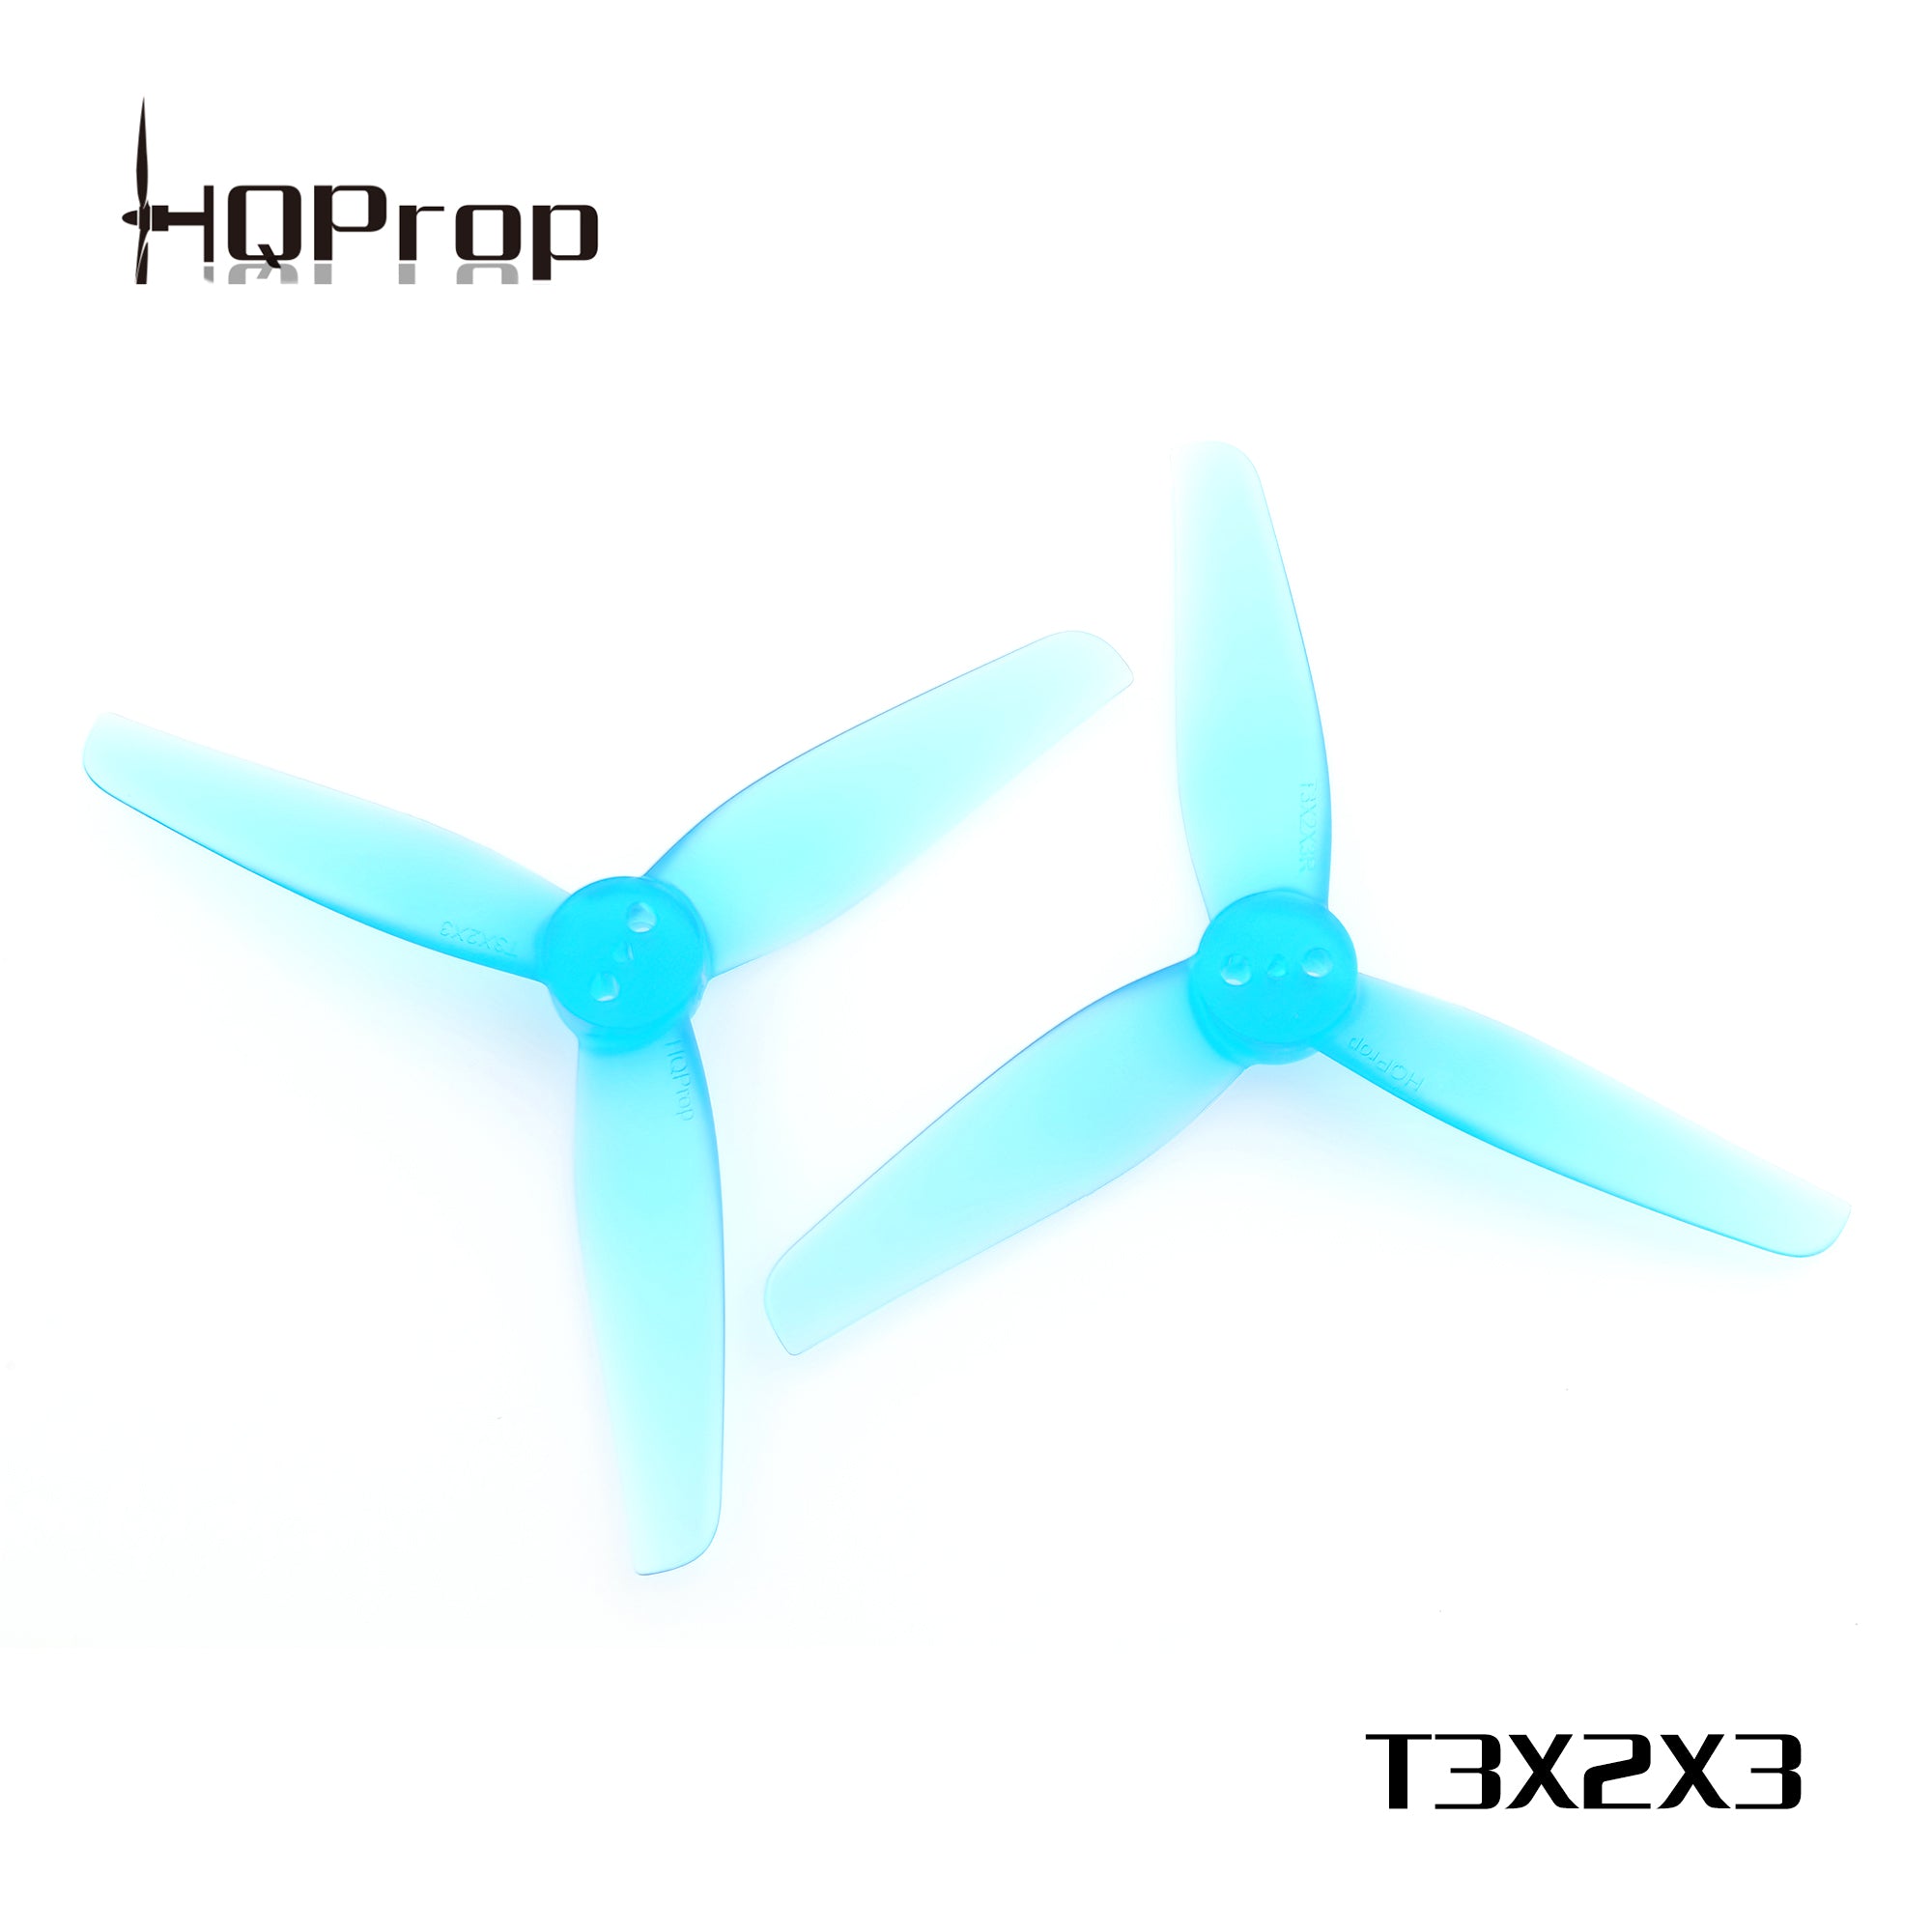 HQProp T3X2X3 3" Propellers (2CW+2CCW)